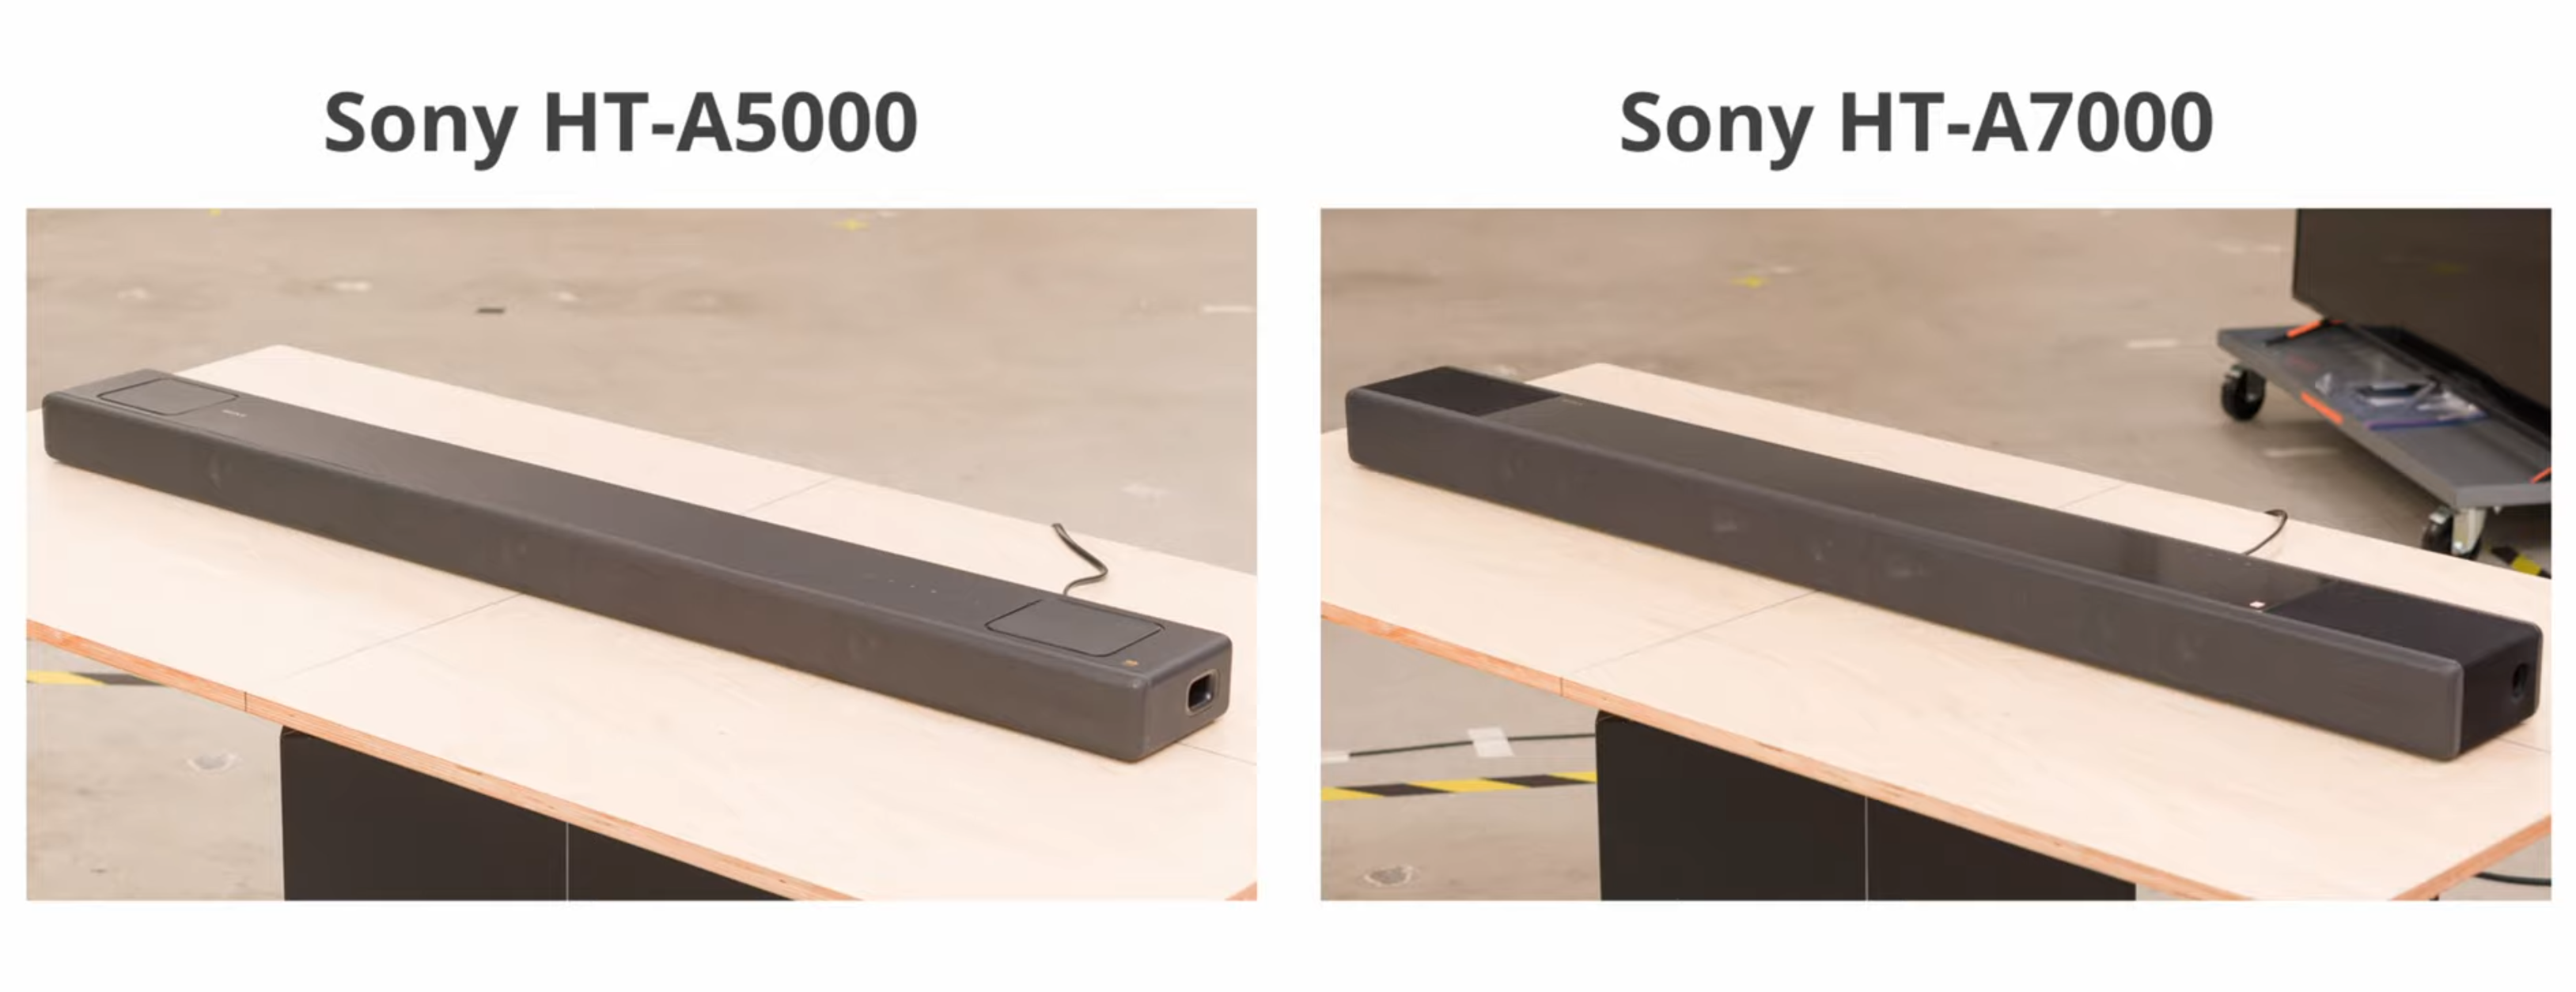 Sony HT-A5000 vs Sony HT-A7000